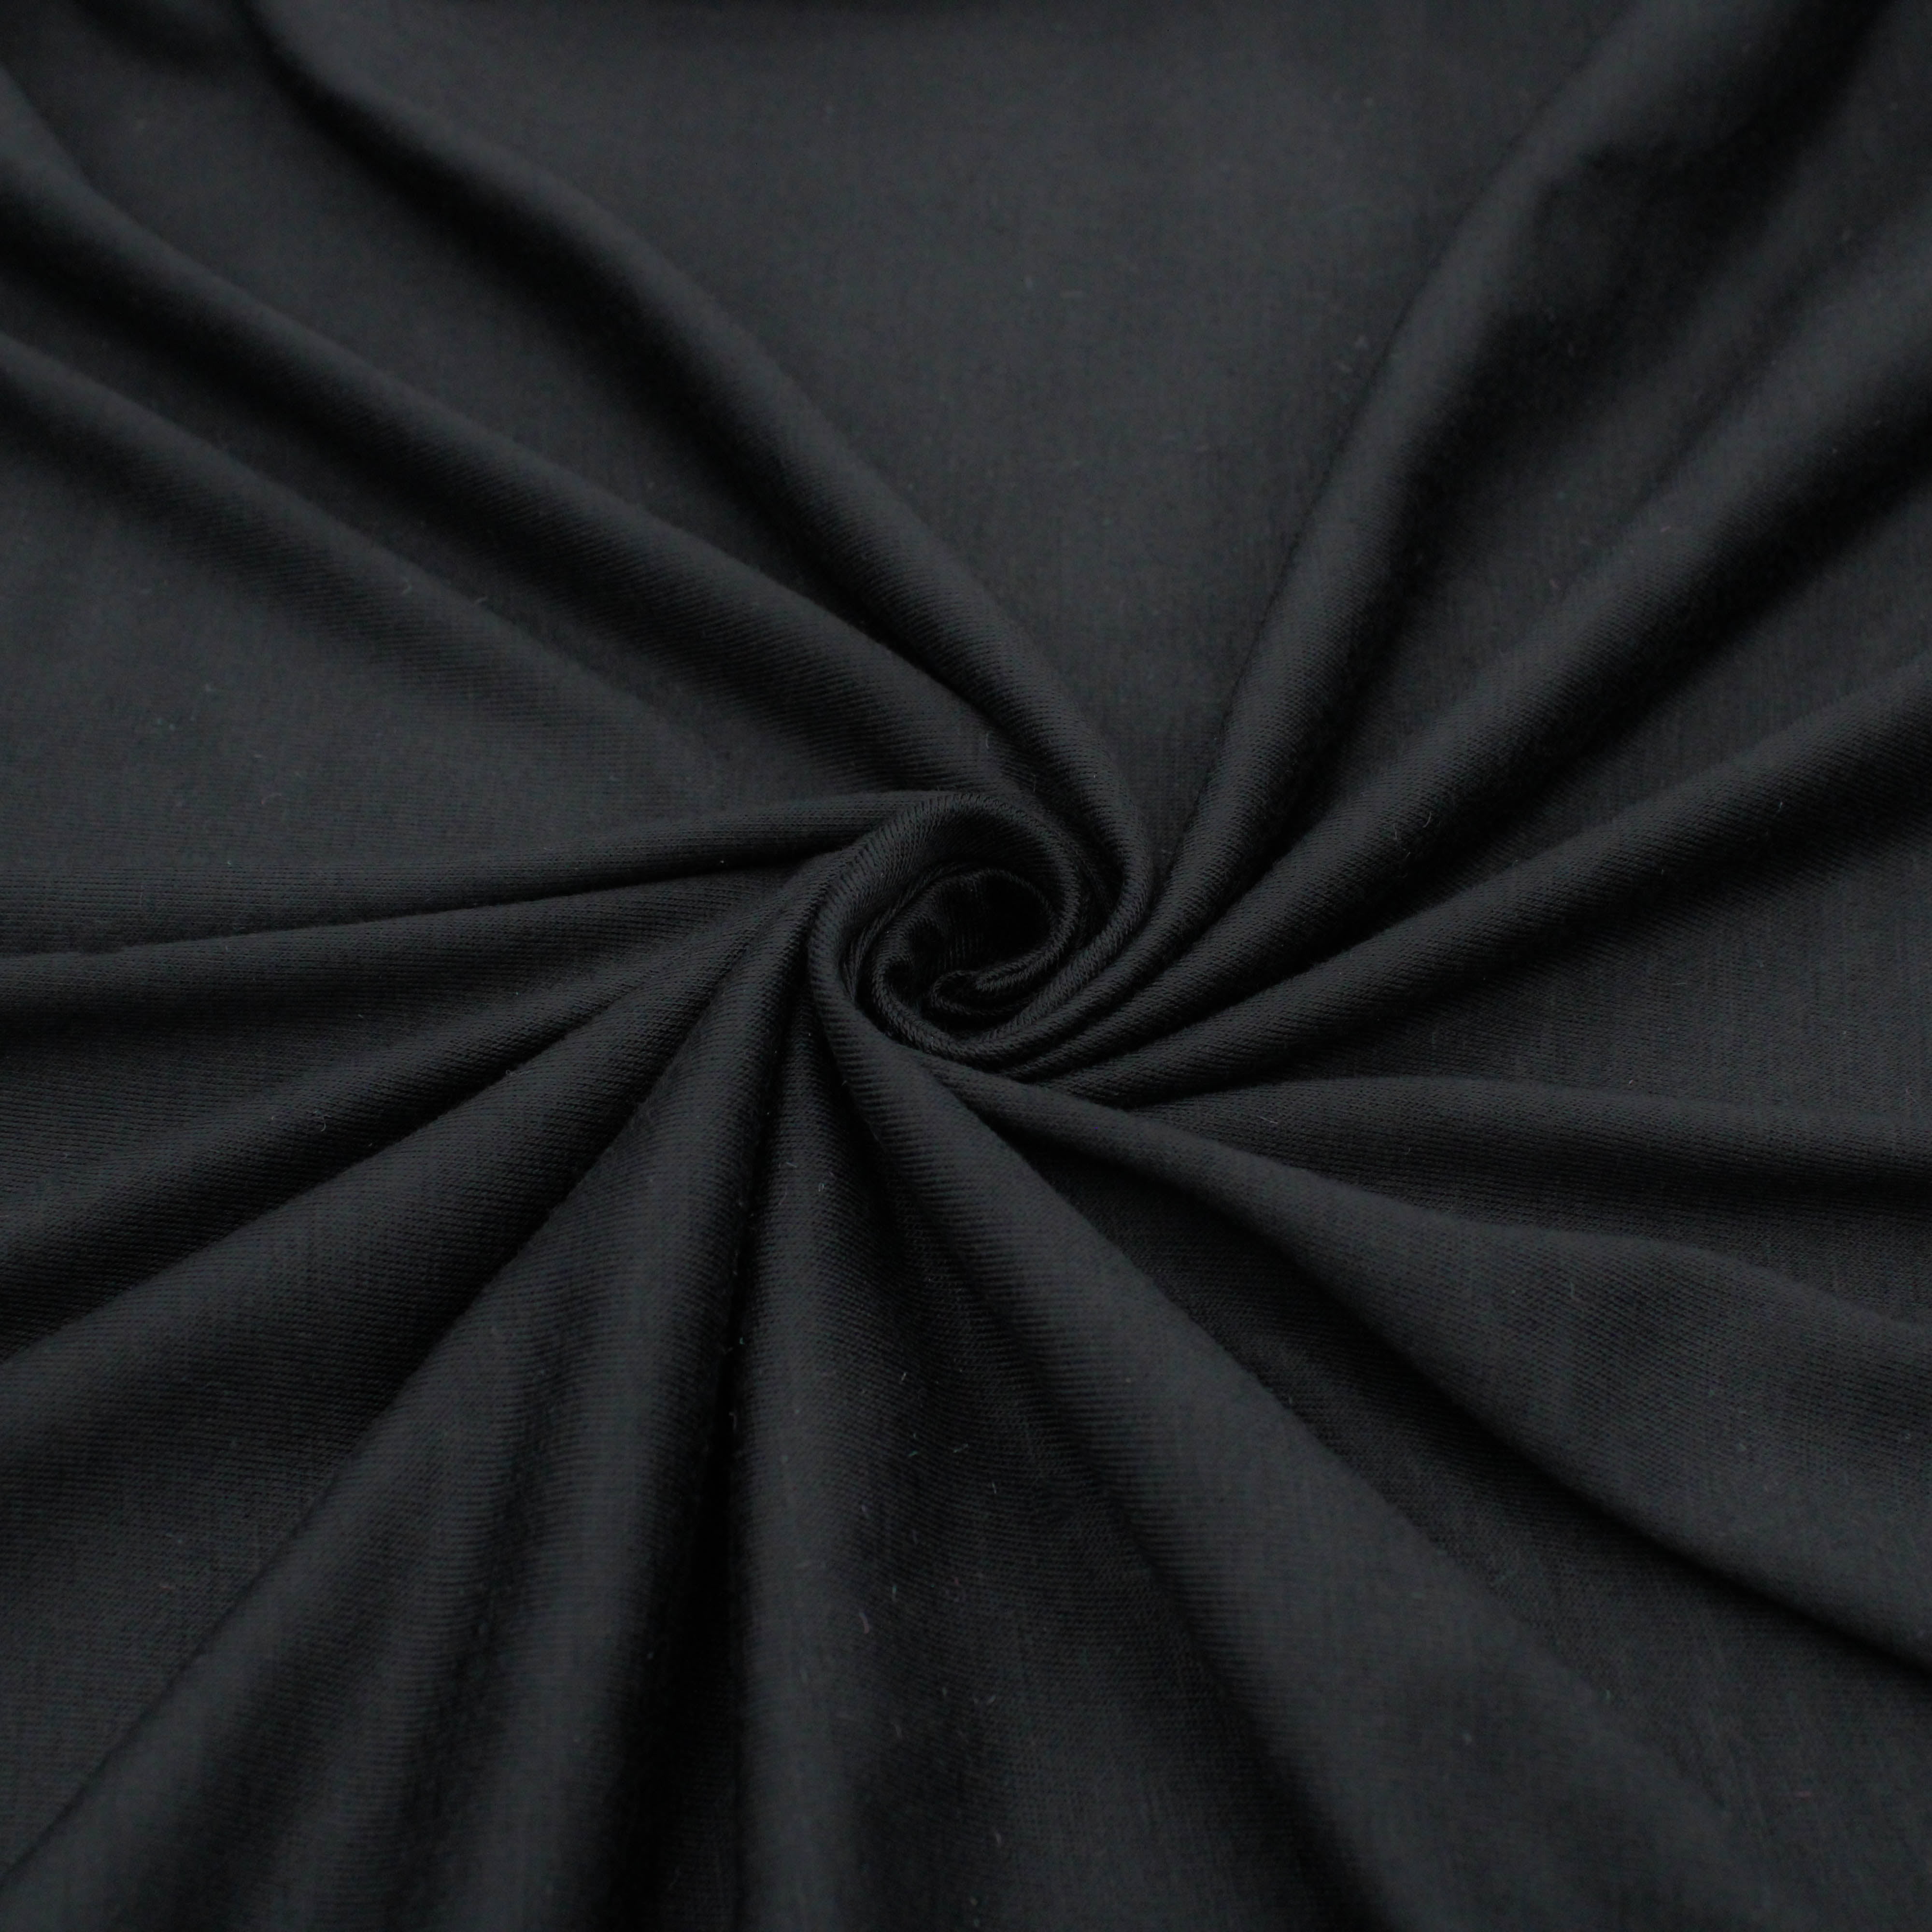 Black Heavyweight Rayon Jersey Spandex Knit Fabric by the Yard,DIY